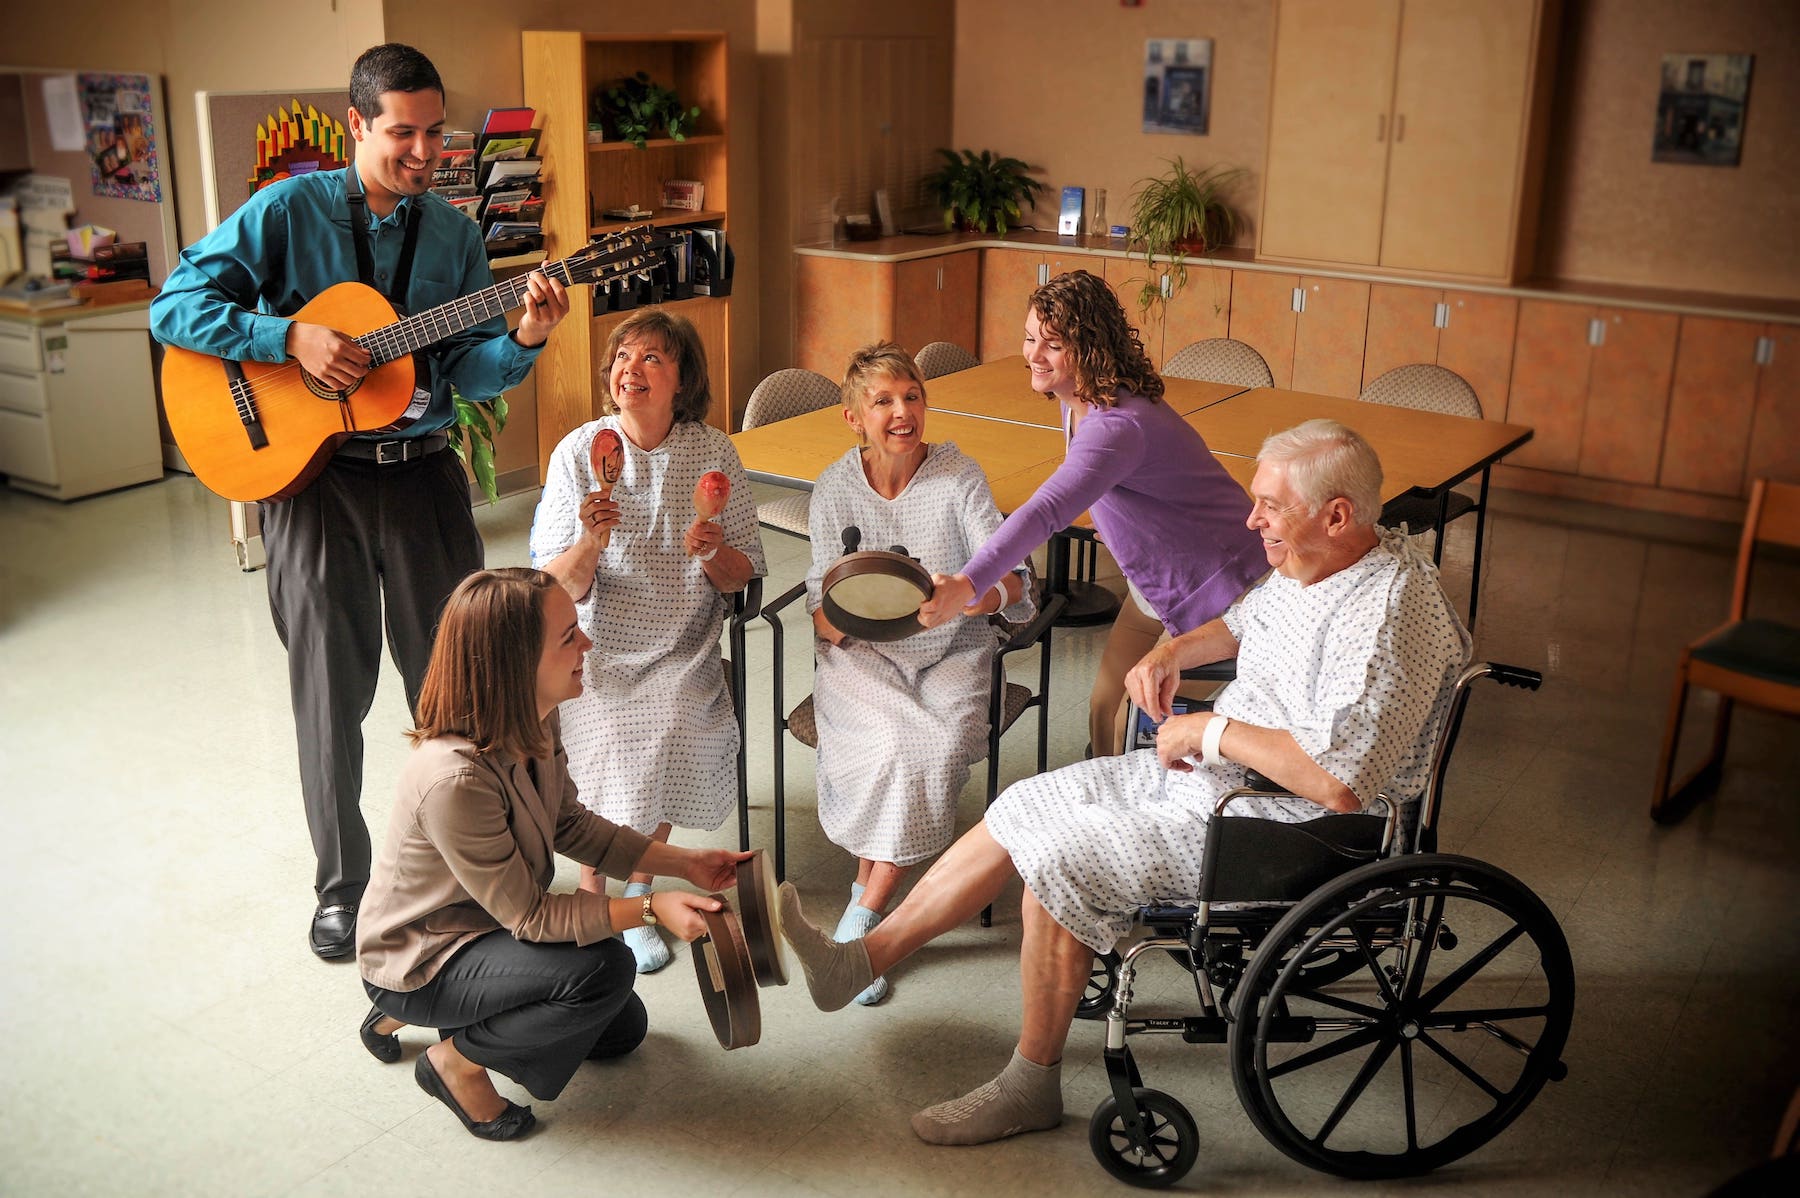 Patients at Florida Hospital enjoying music therapy healing